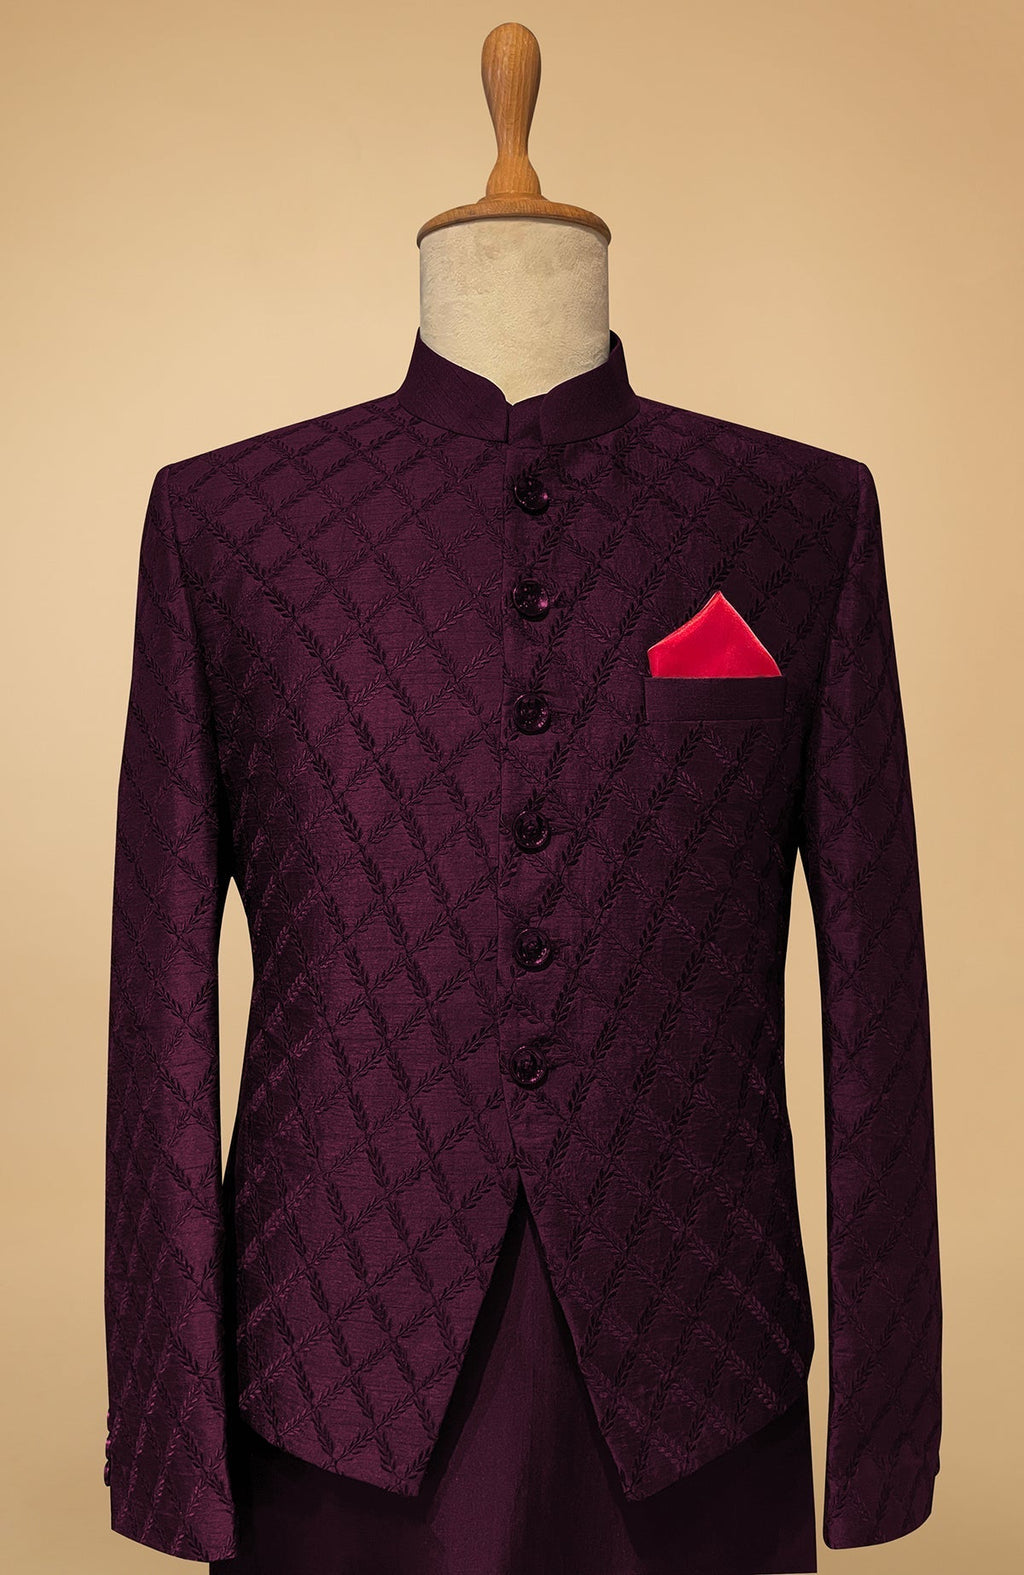 Maroon double button bandhgala jacket. Whatsapp on +917289895895